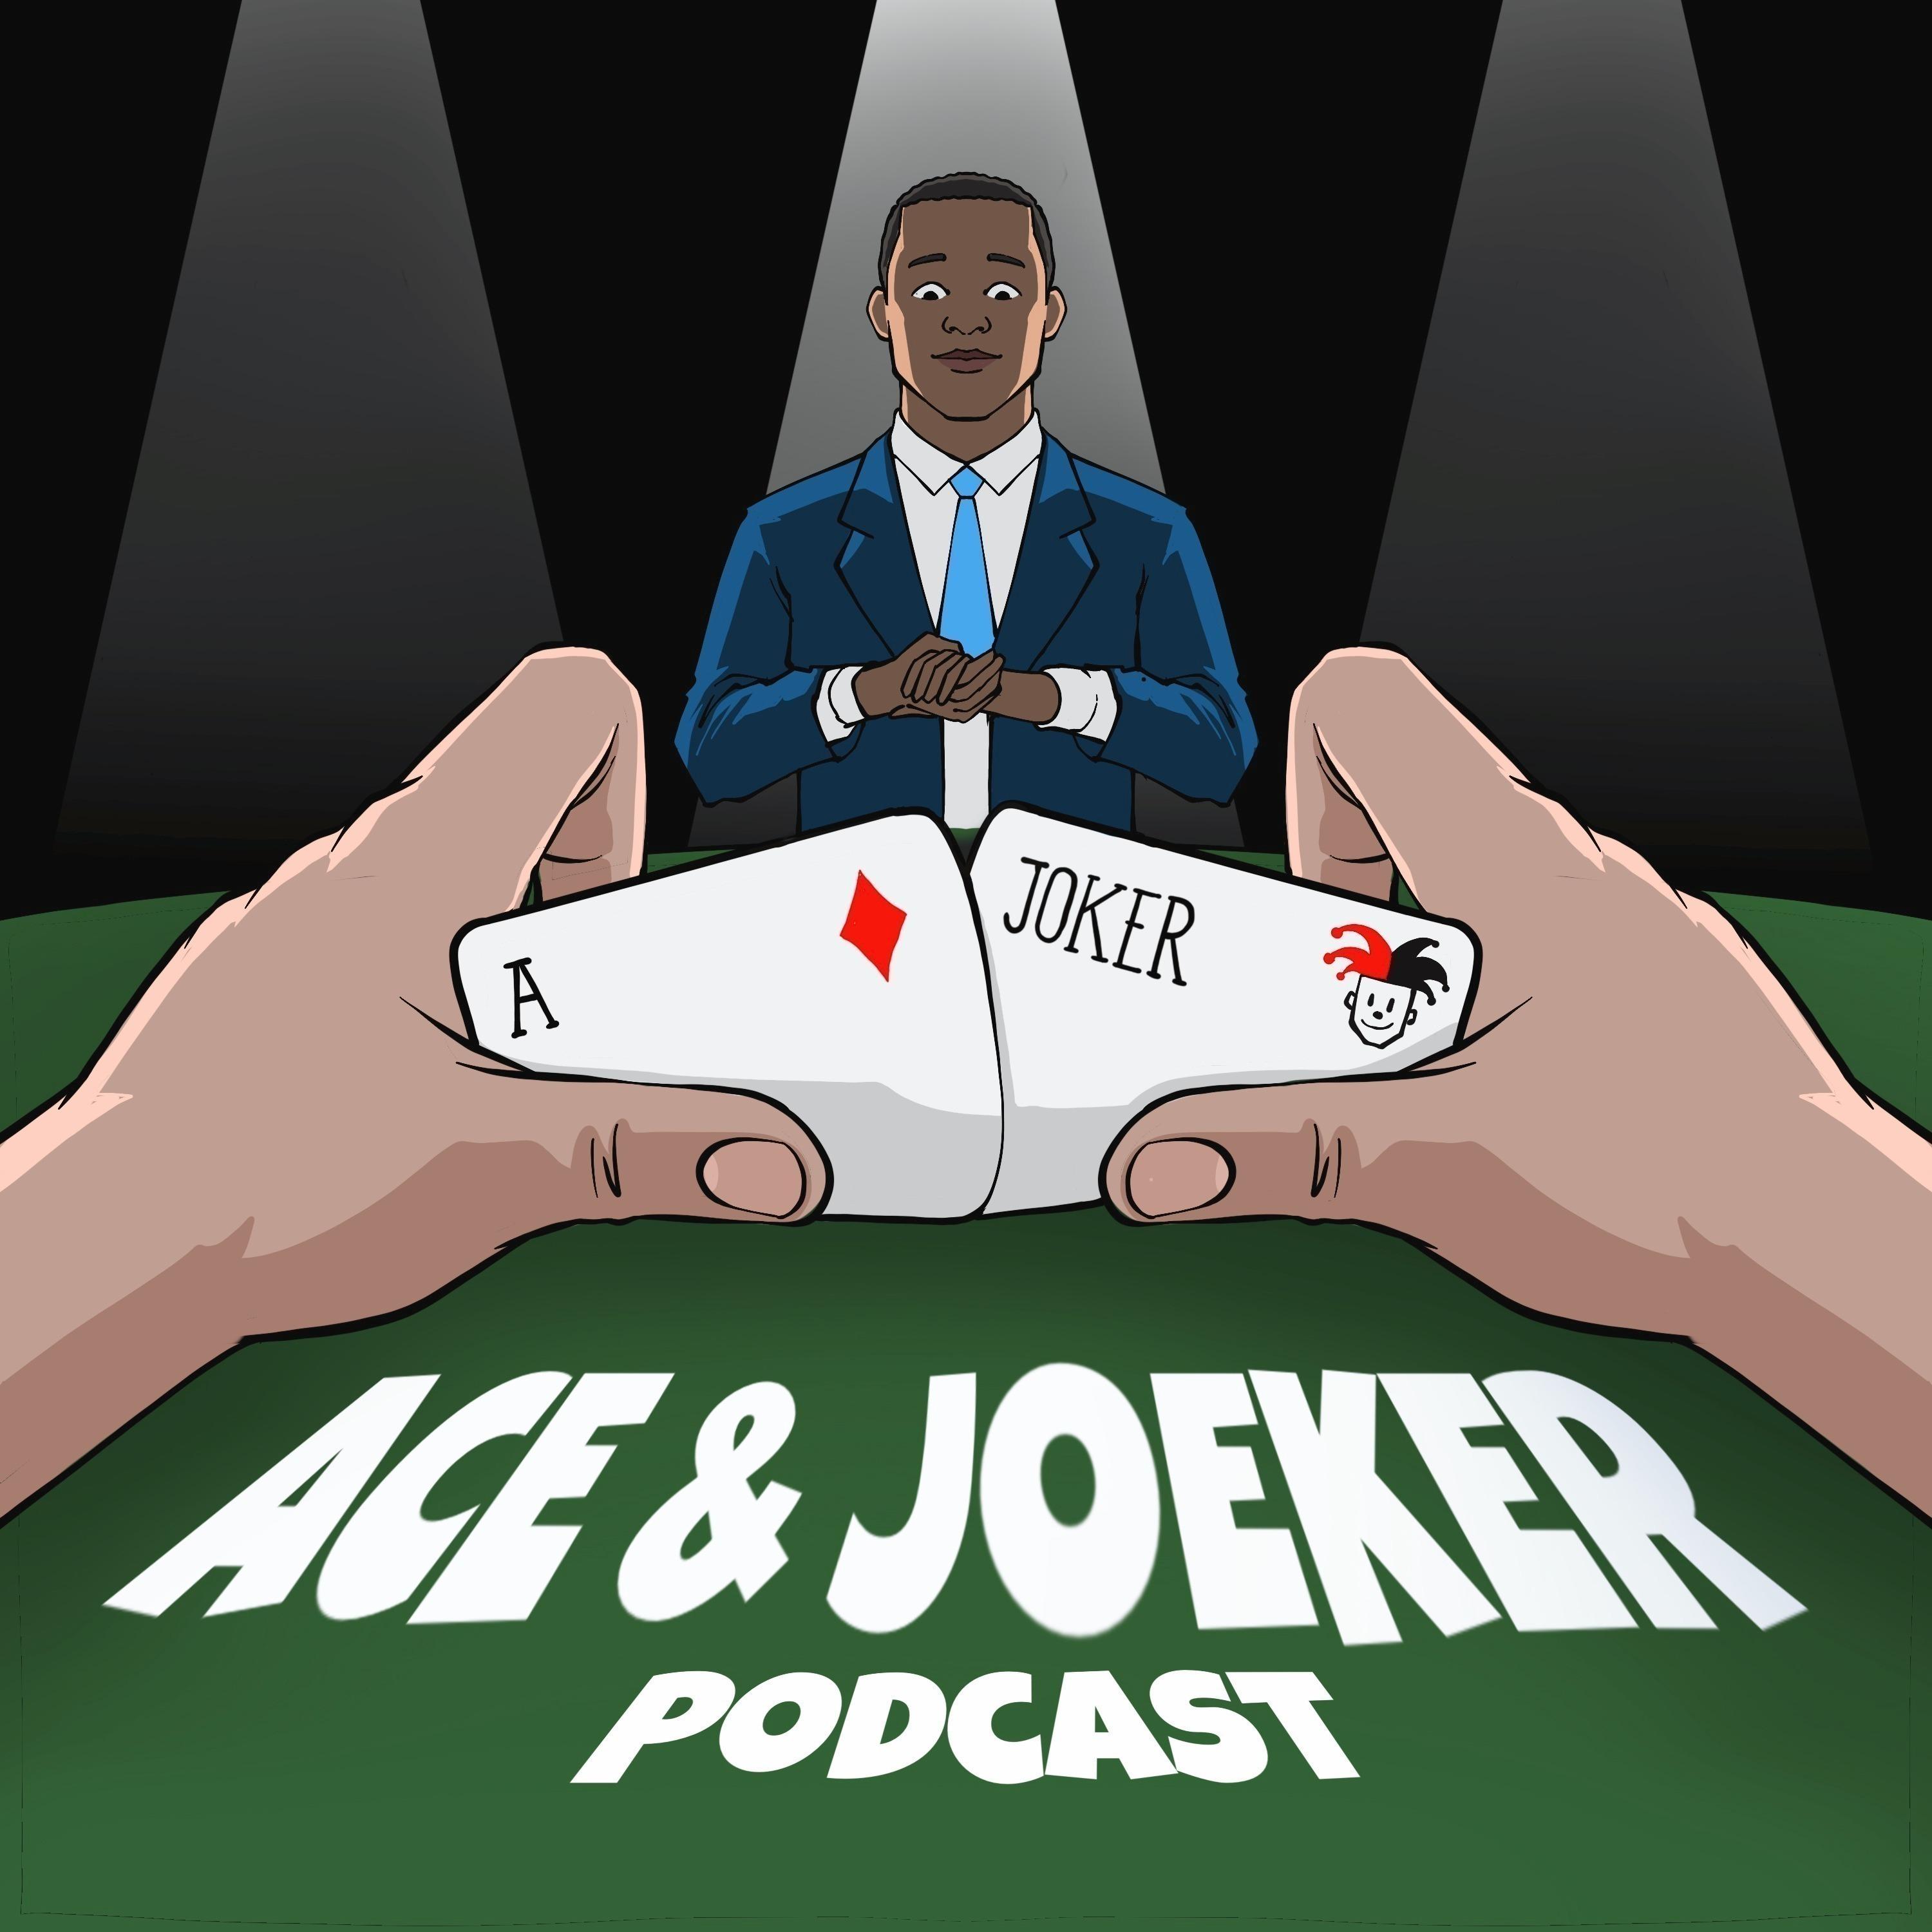 Ace & Joeker Podcast